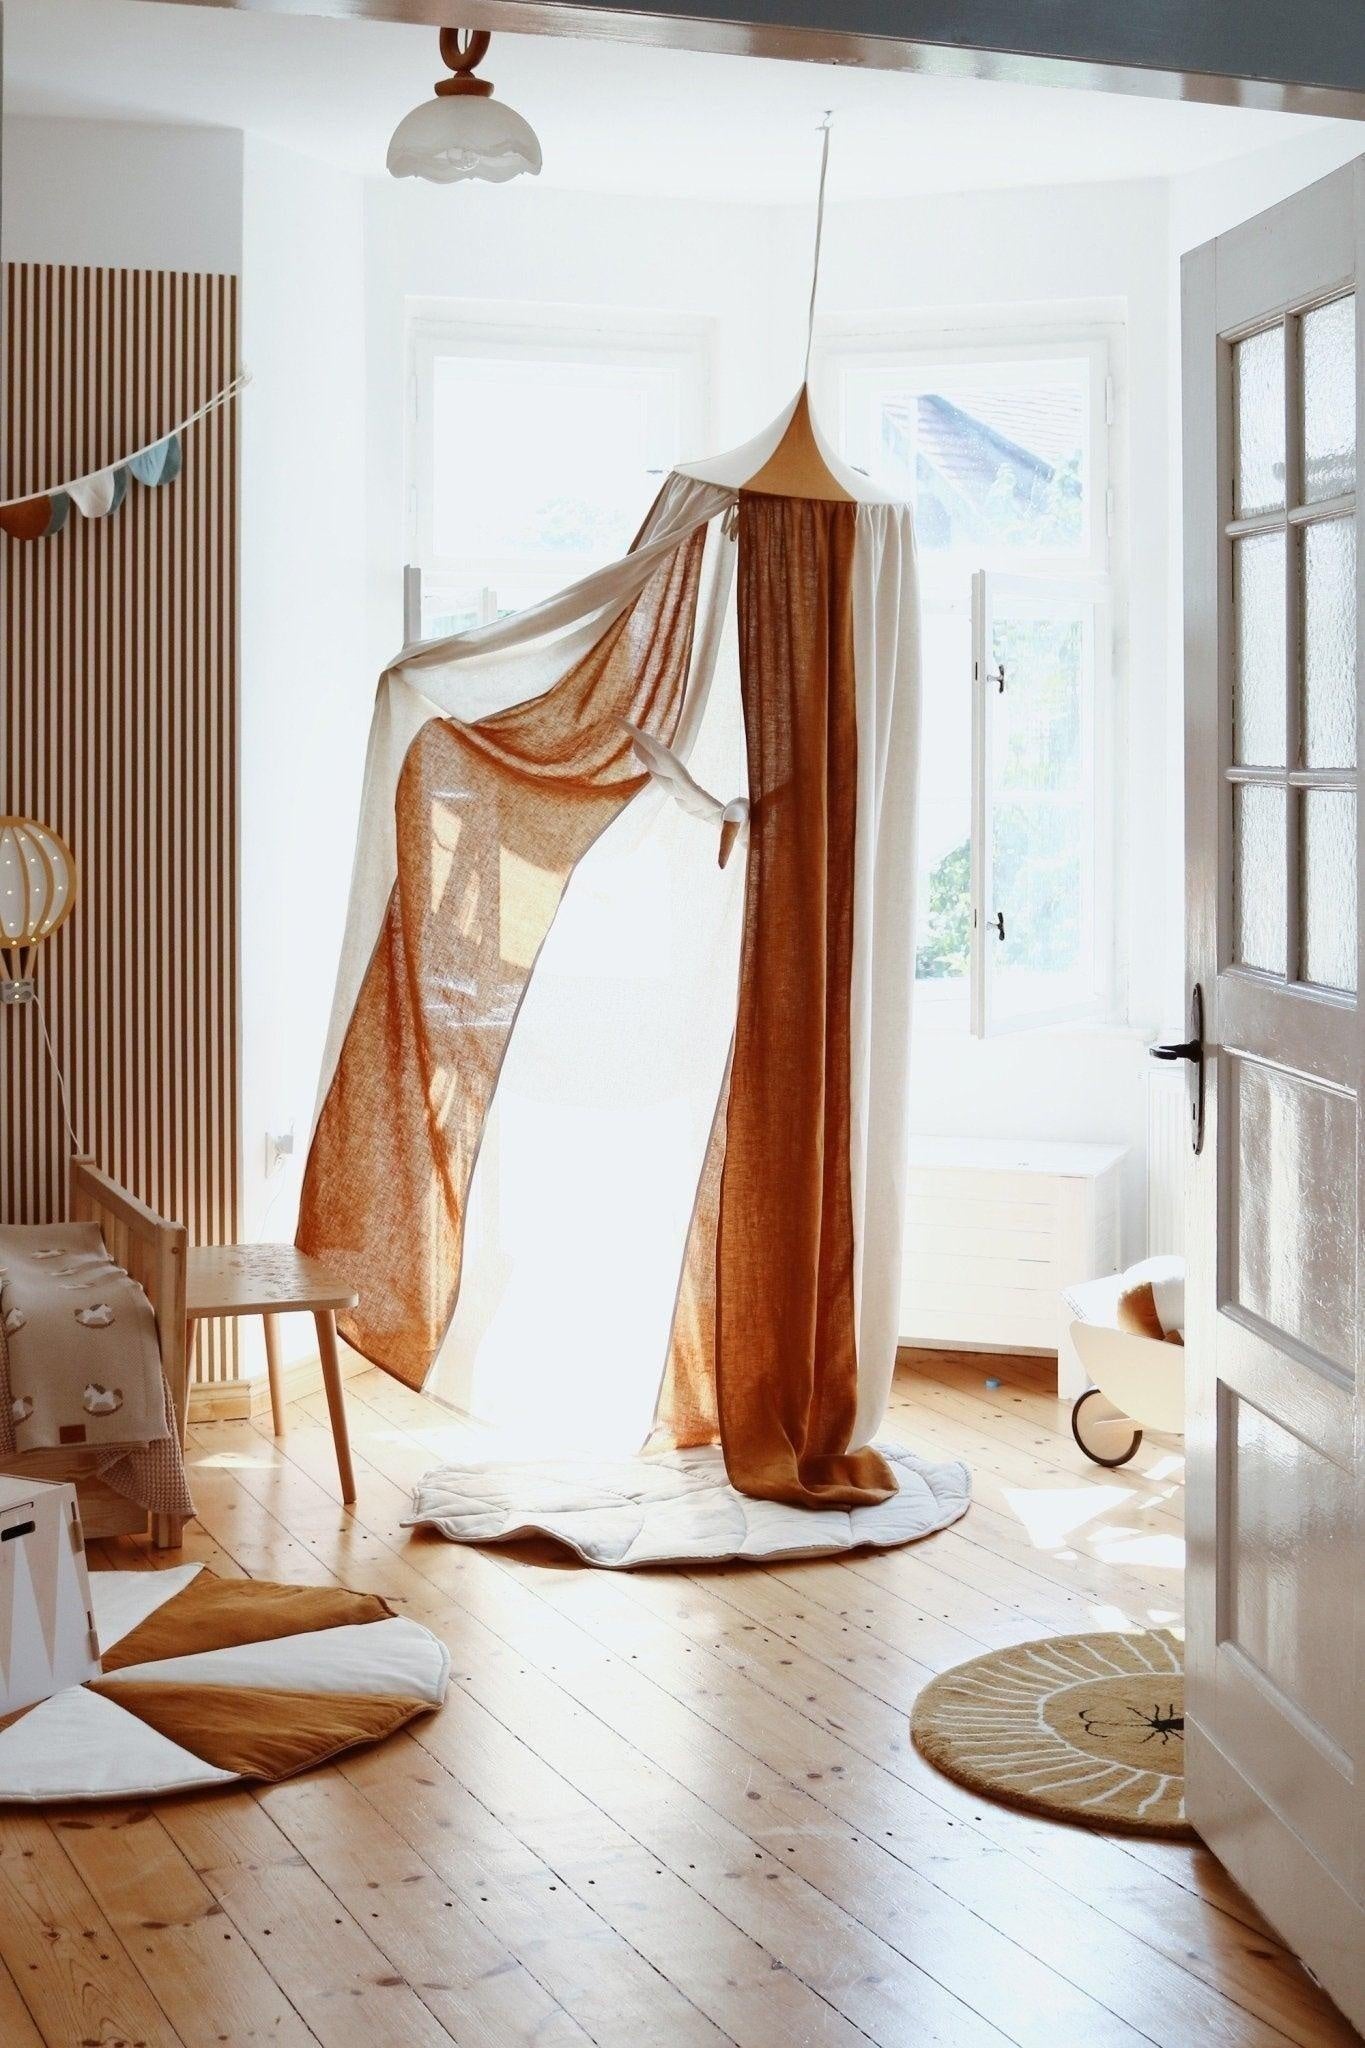 moimili Überdachung "Caramel Circus" - Stilvolle Accessoires für das Kinderbett